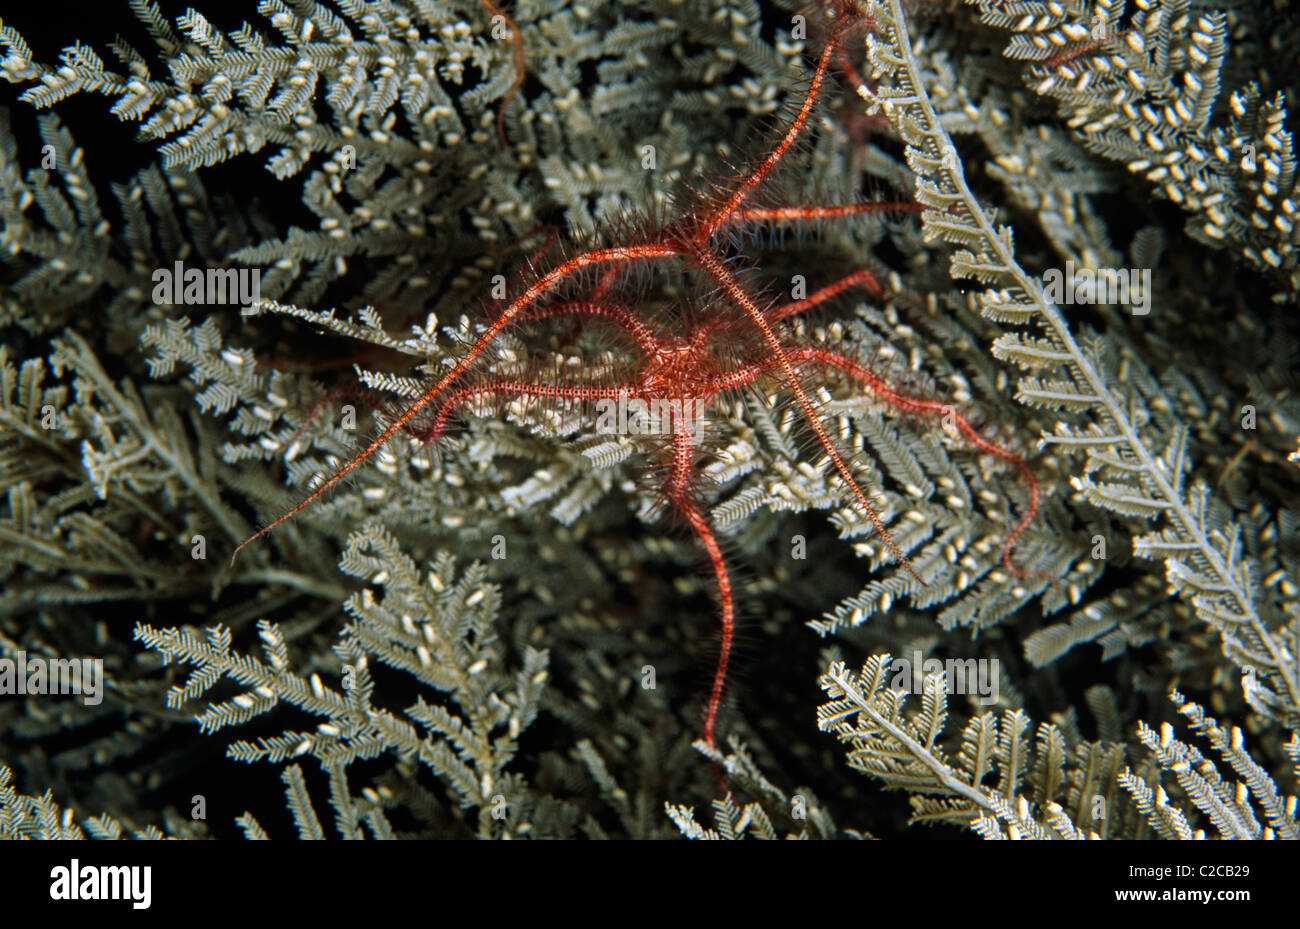 Estrella quebradiza, Ophiothrix sp, On Hydroid, Clase Hydrozoa, Manado, Sulawesi, Indonesia, Asia Foto de stock